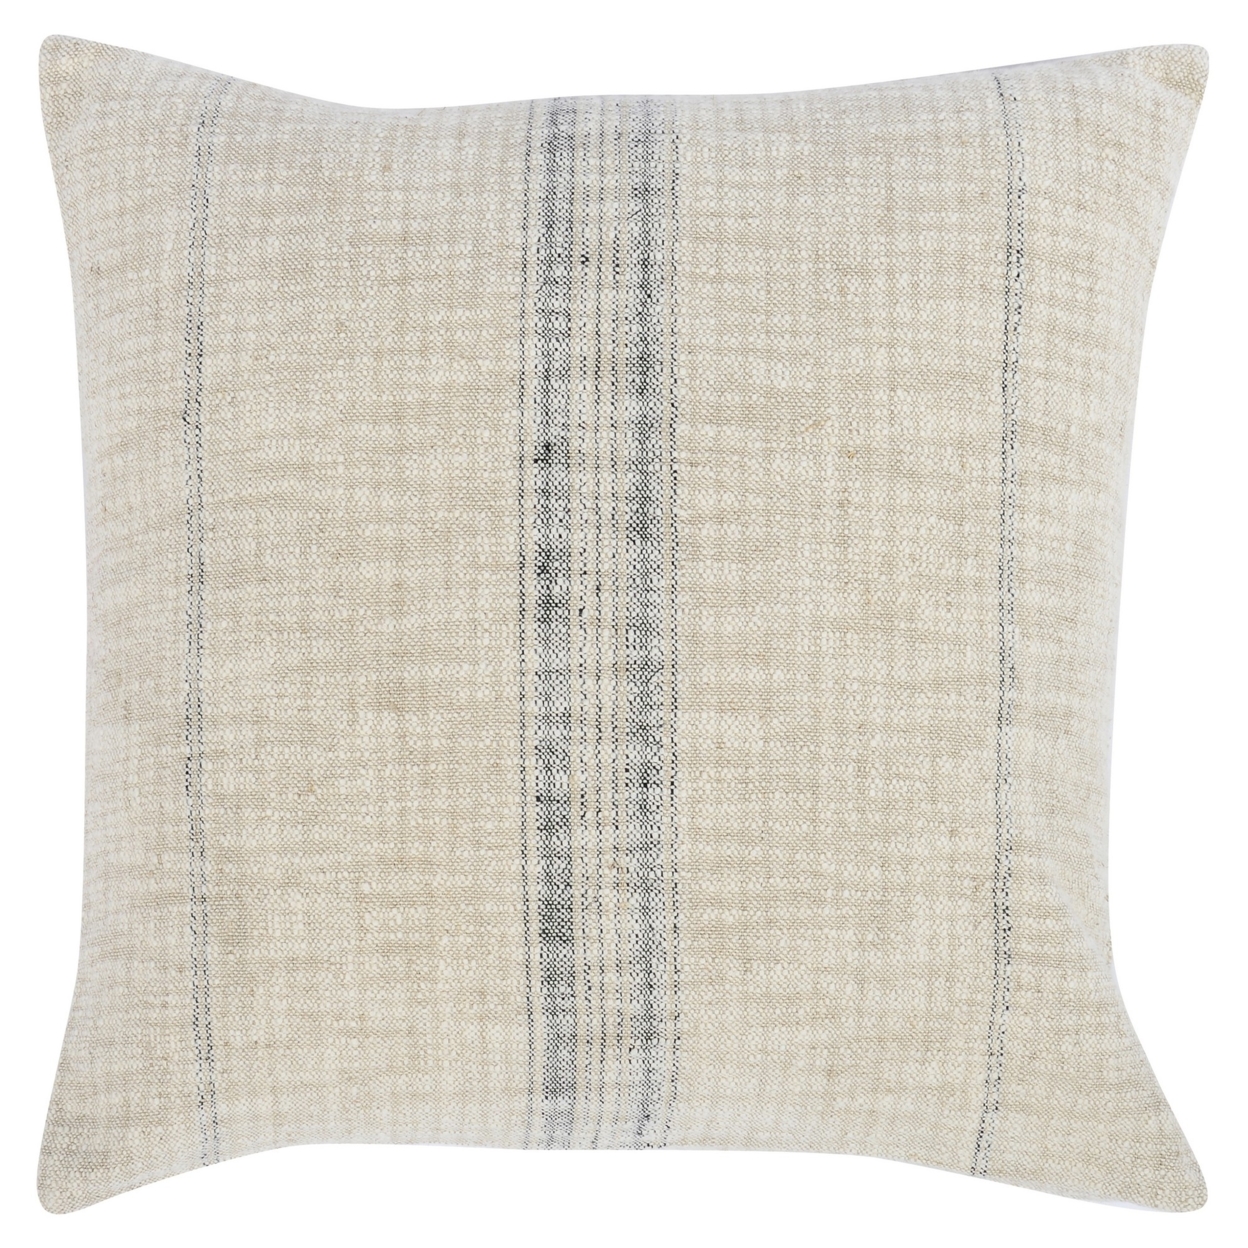 Tia 22 Inch Square Accent Throw Pillow With Woven Black Stripe, Beige Linen- Saltoro Sherpi